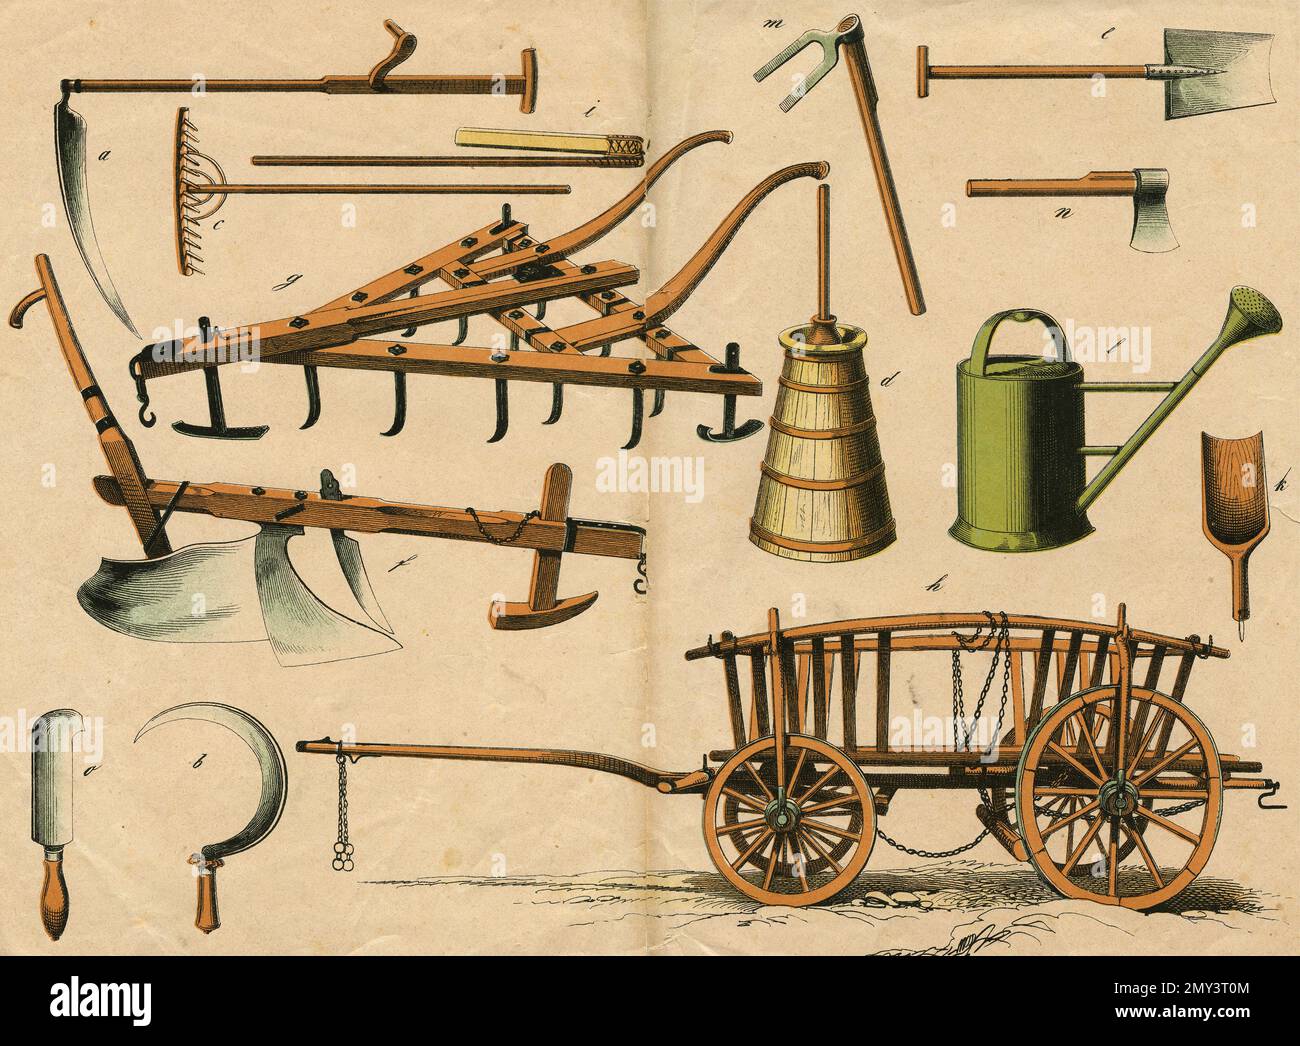 Ancient farmer's tools: Wagon, sickle, plow, rake, etc., color illustration, 1800s Stock Photo